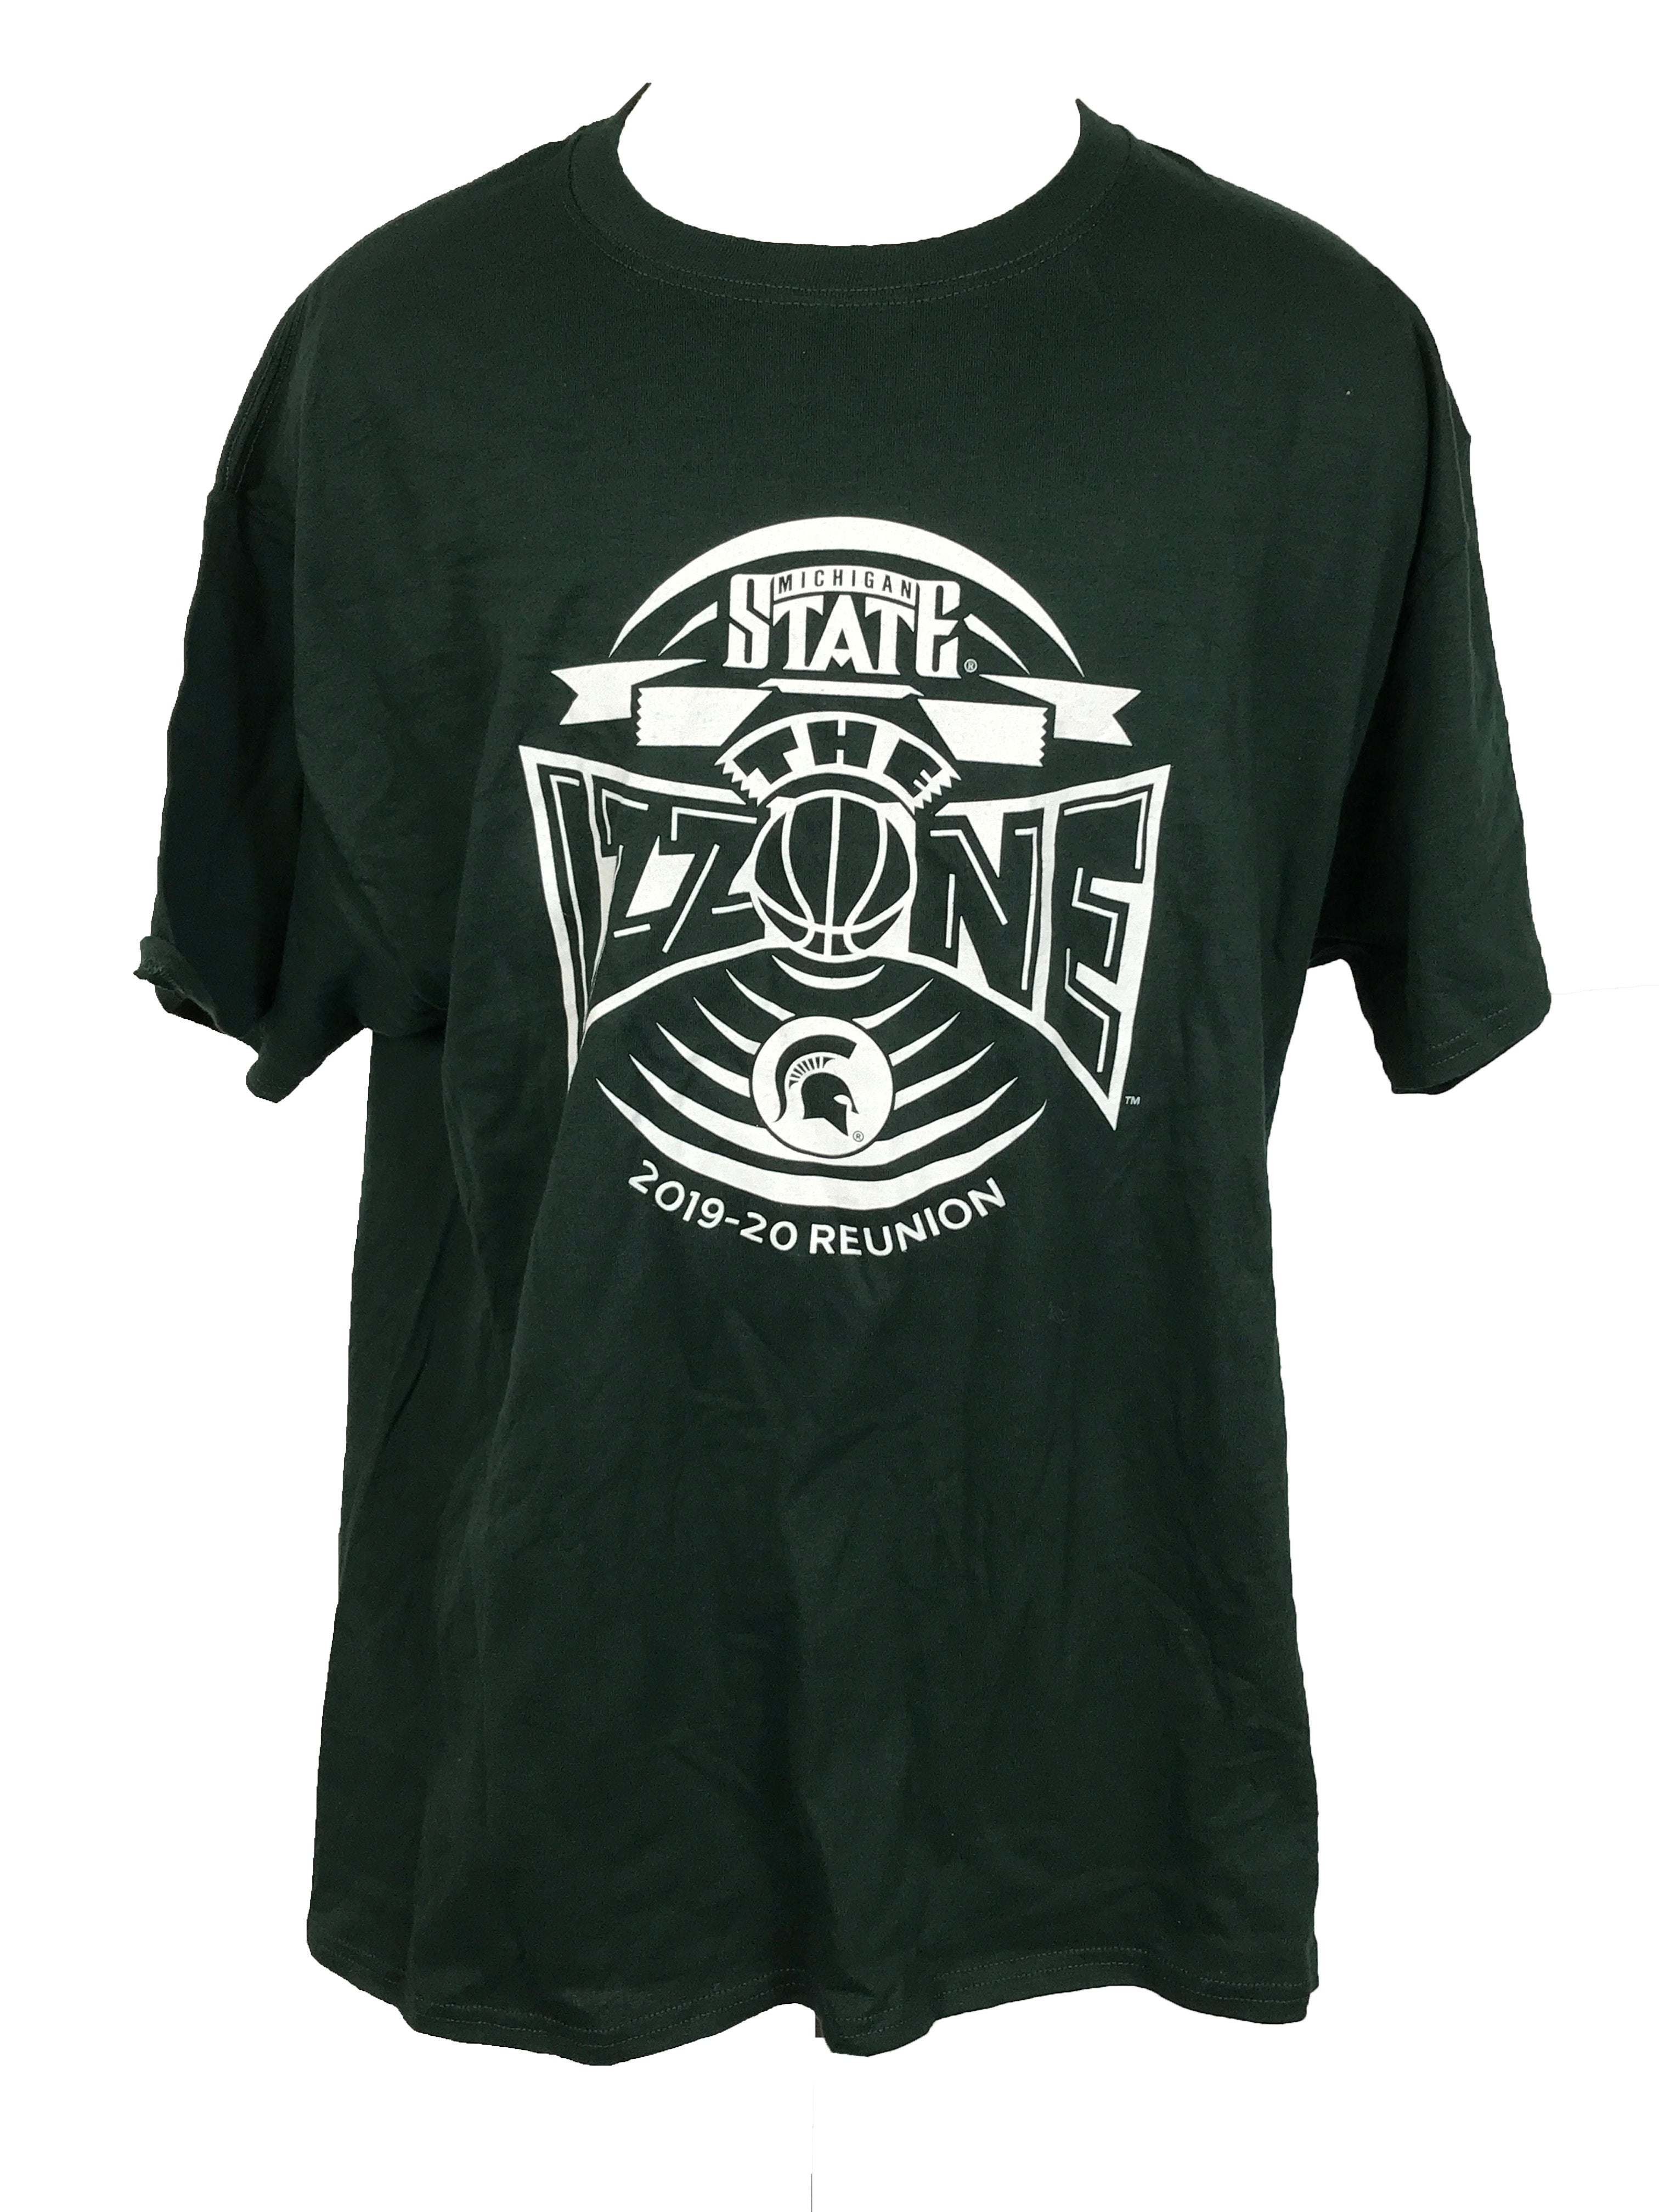 Hanes Green The Izzone 2019-2020 Reunion MSU Basketball T-Shirt Men's Size XL